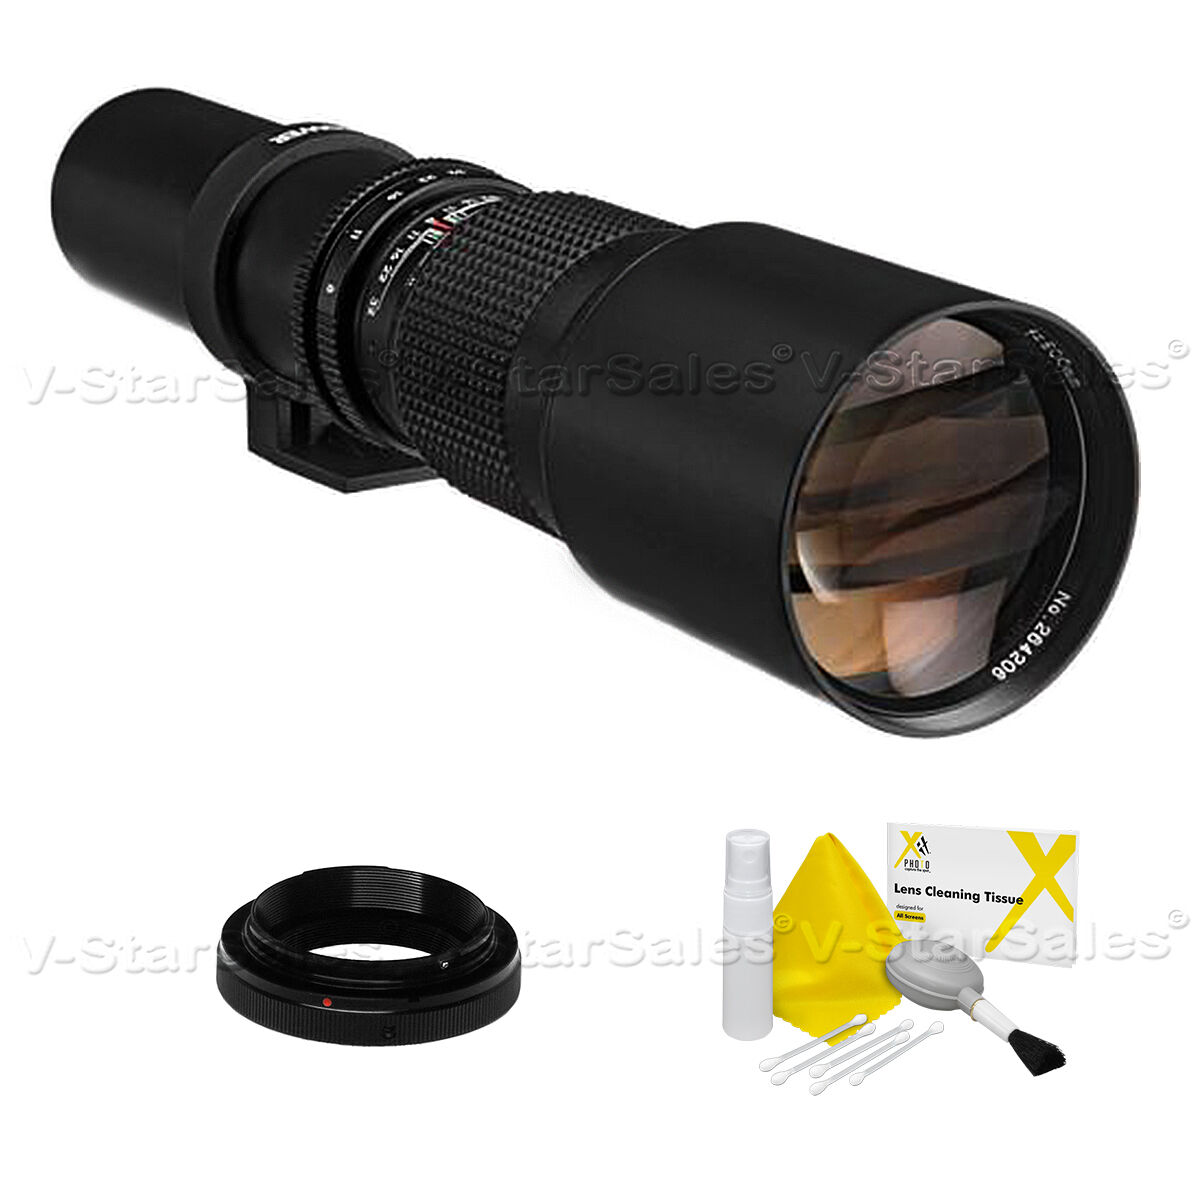 500mm/1000mm Telephoto Lens for Nikon Cameras